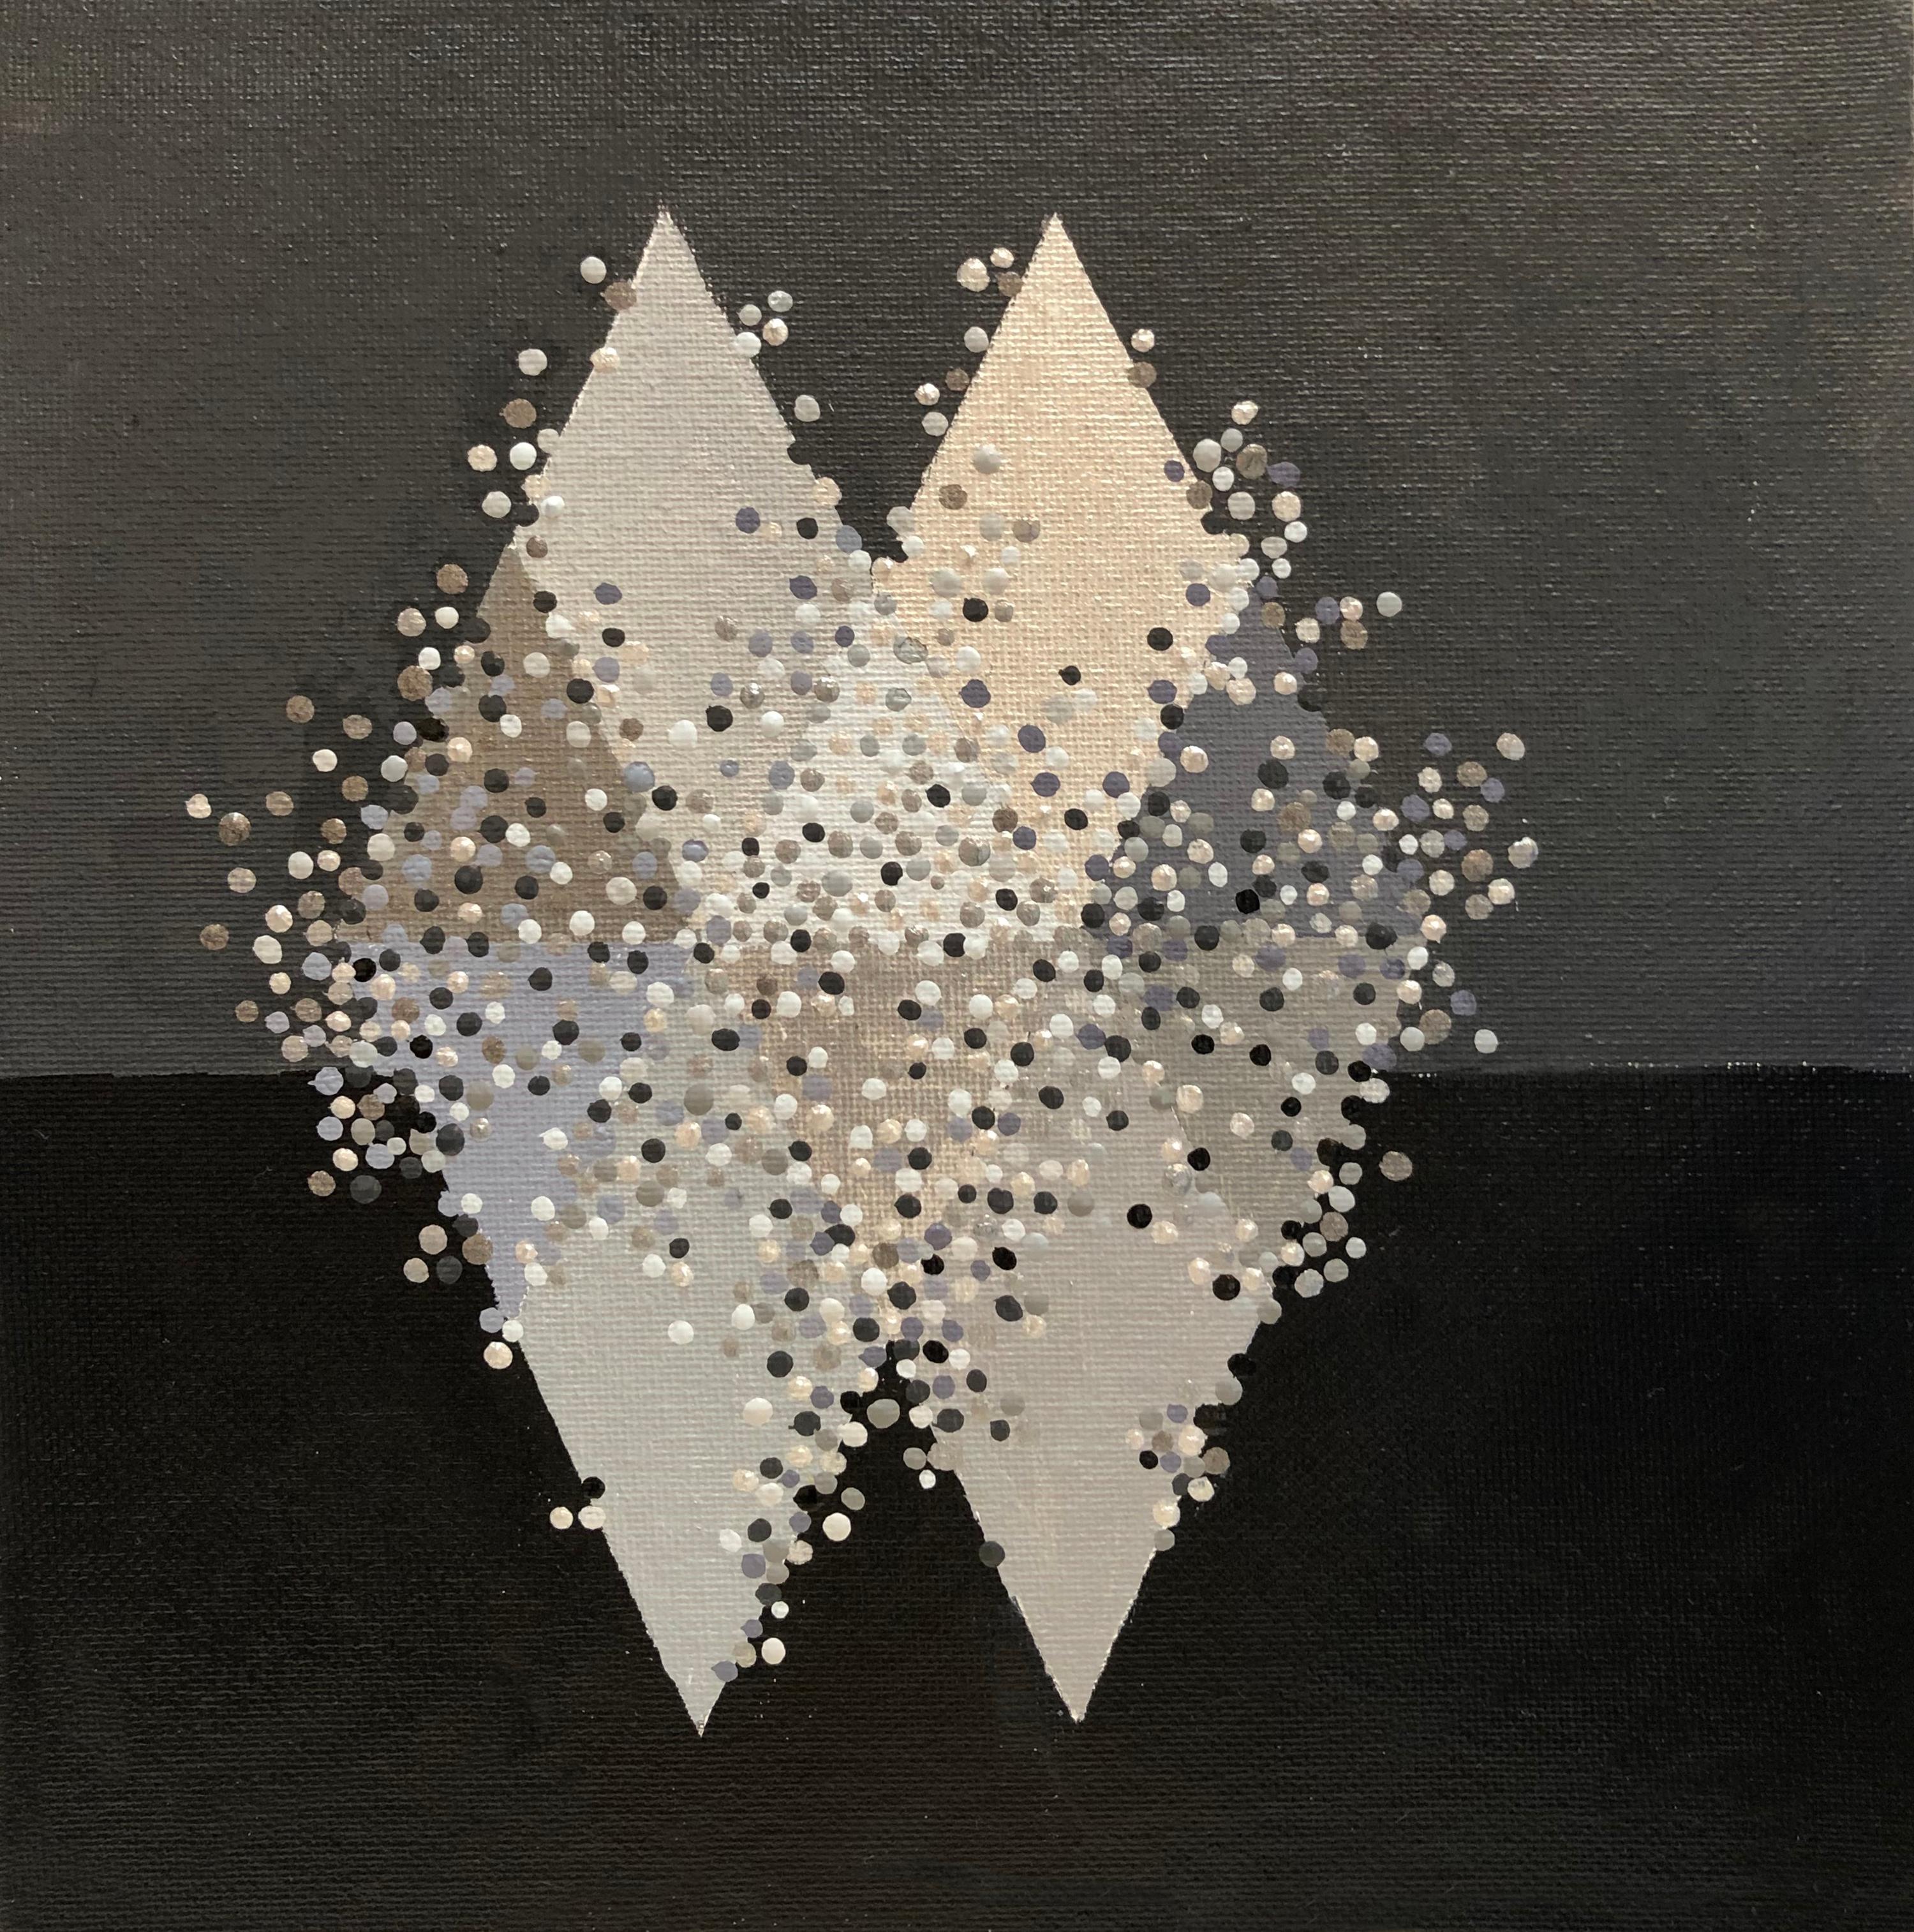 Study with Overlapping Diamonds II - Painting by Barbara Kolo